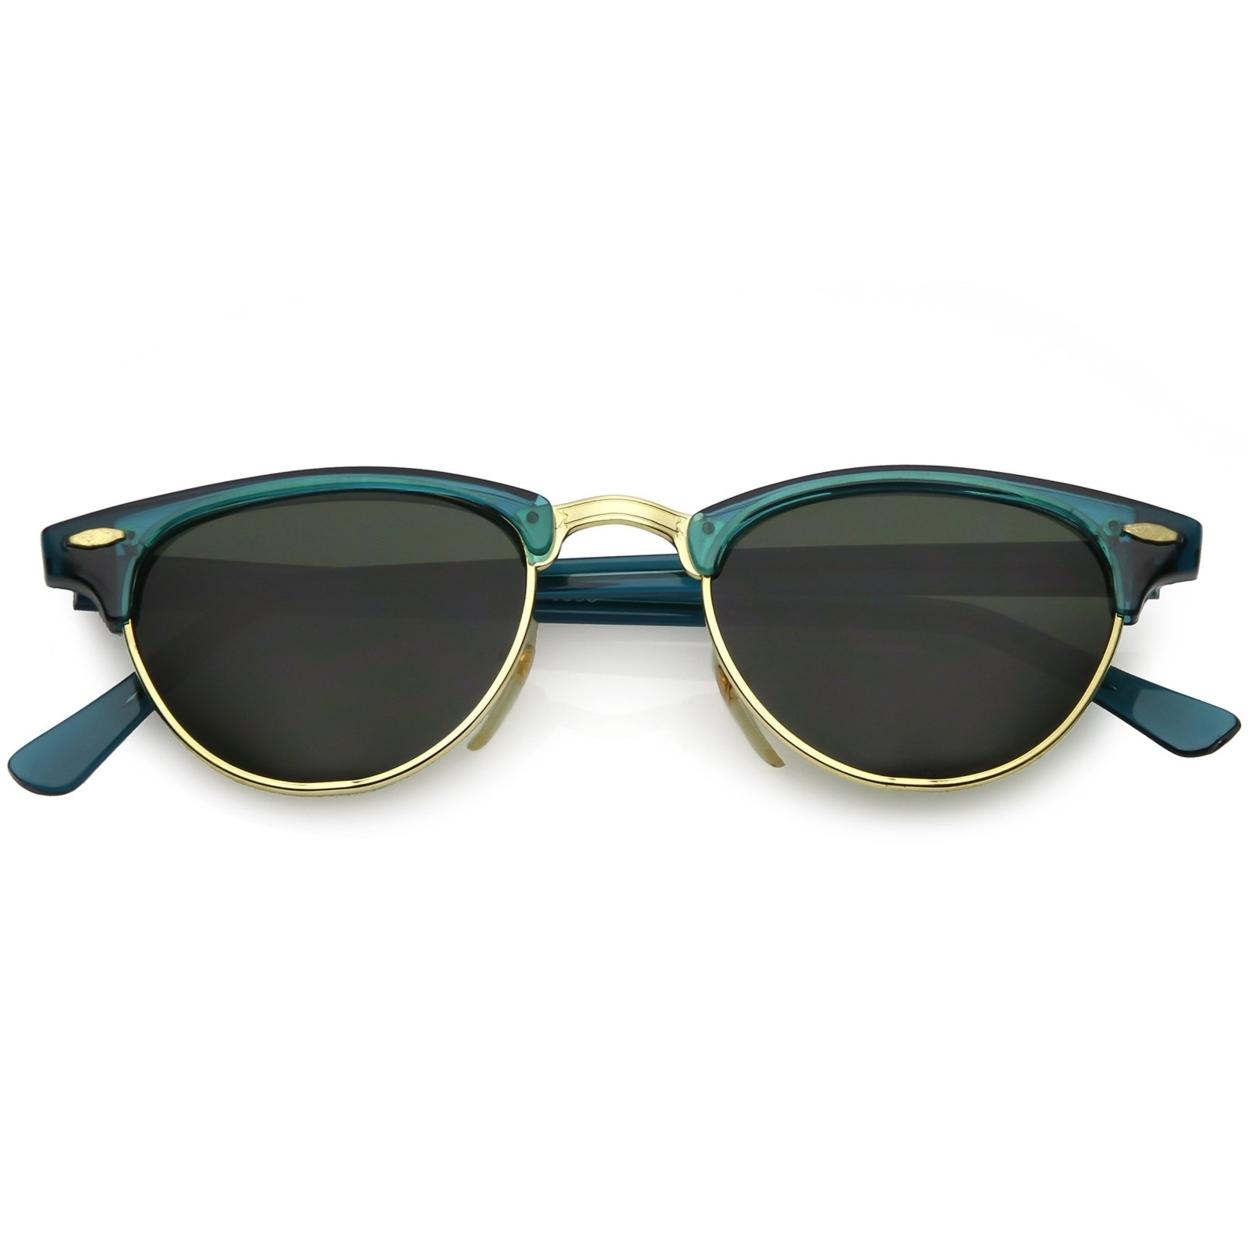 True Vintage Horn Rimmed Semi Rimless Sunglasses Green Tinted Oval Lens 49mm - Magenta / Green